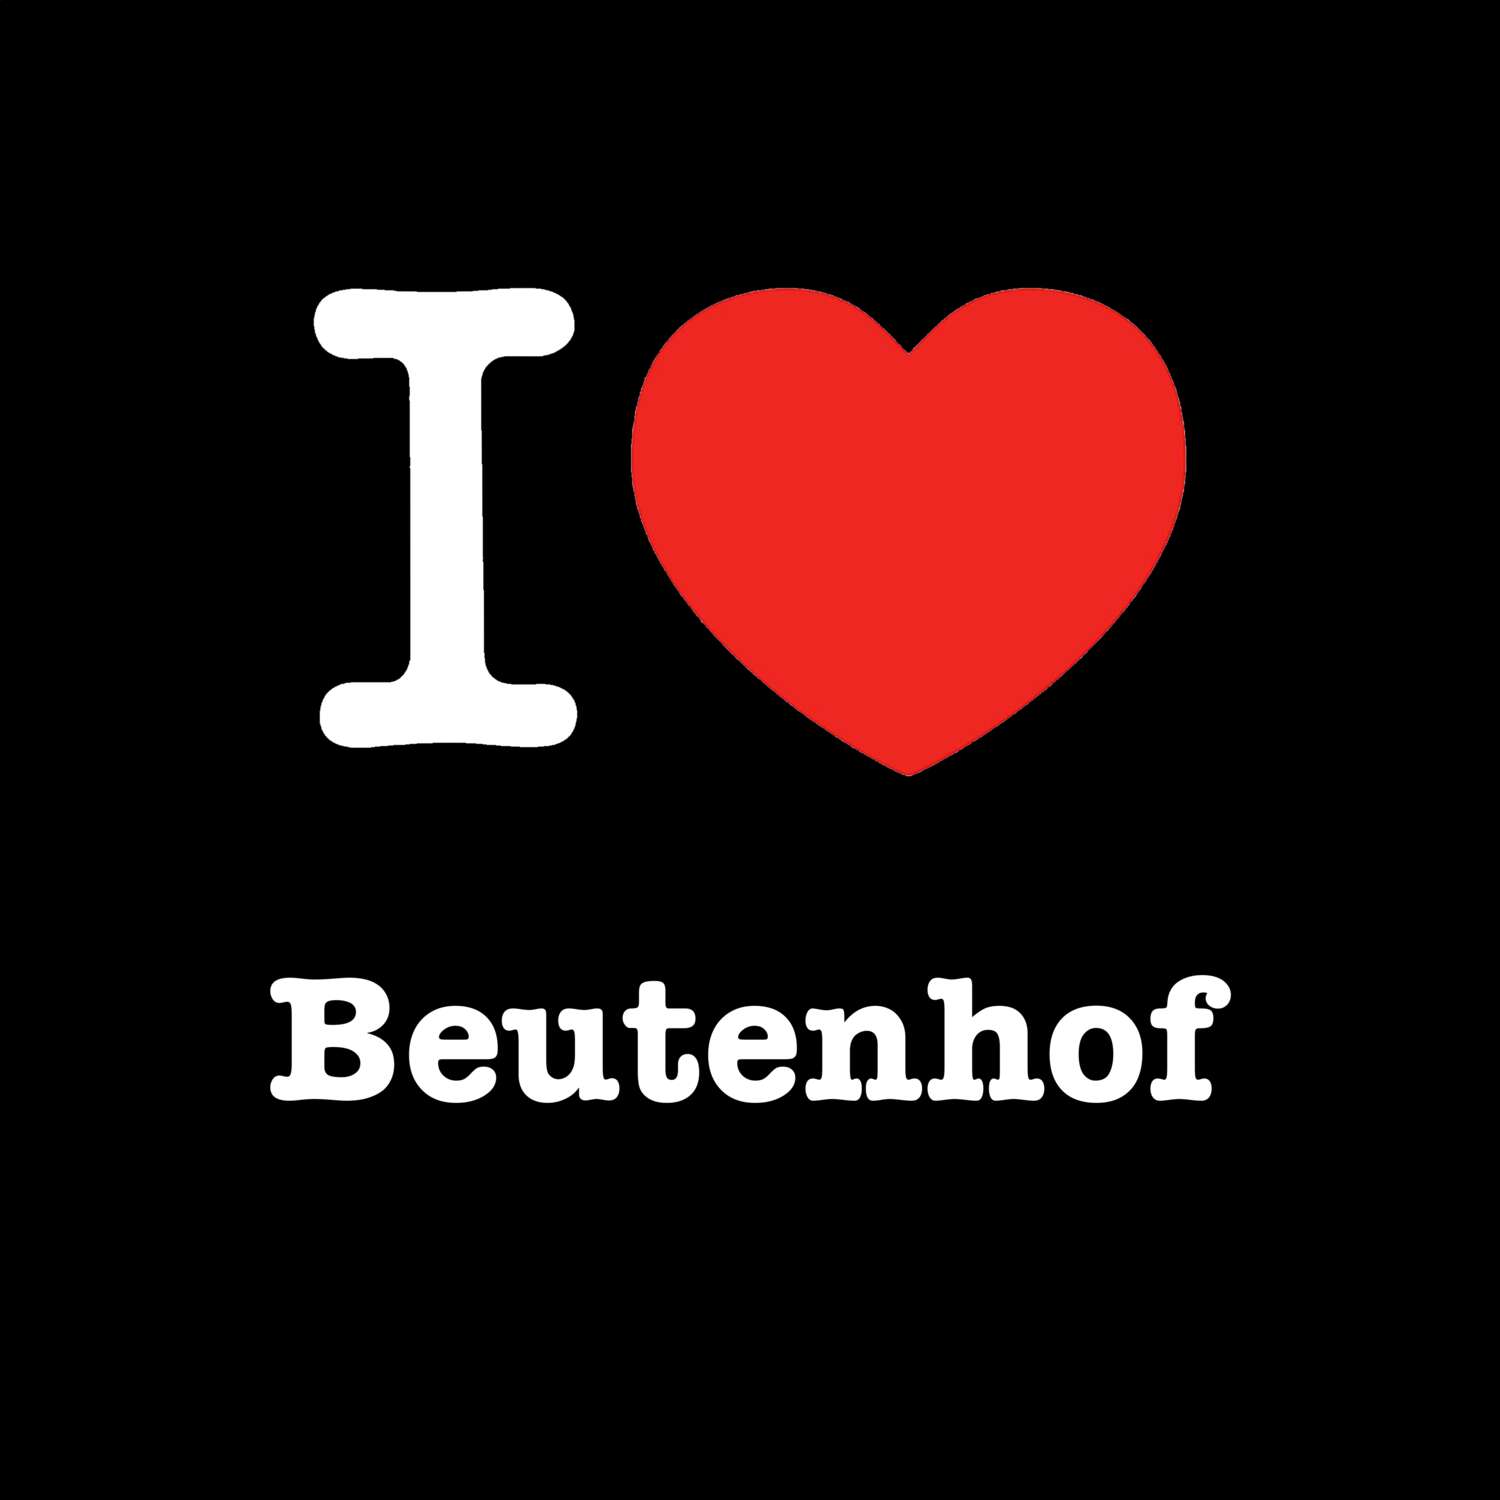 Beutenhof T-Shirt »I love«